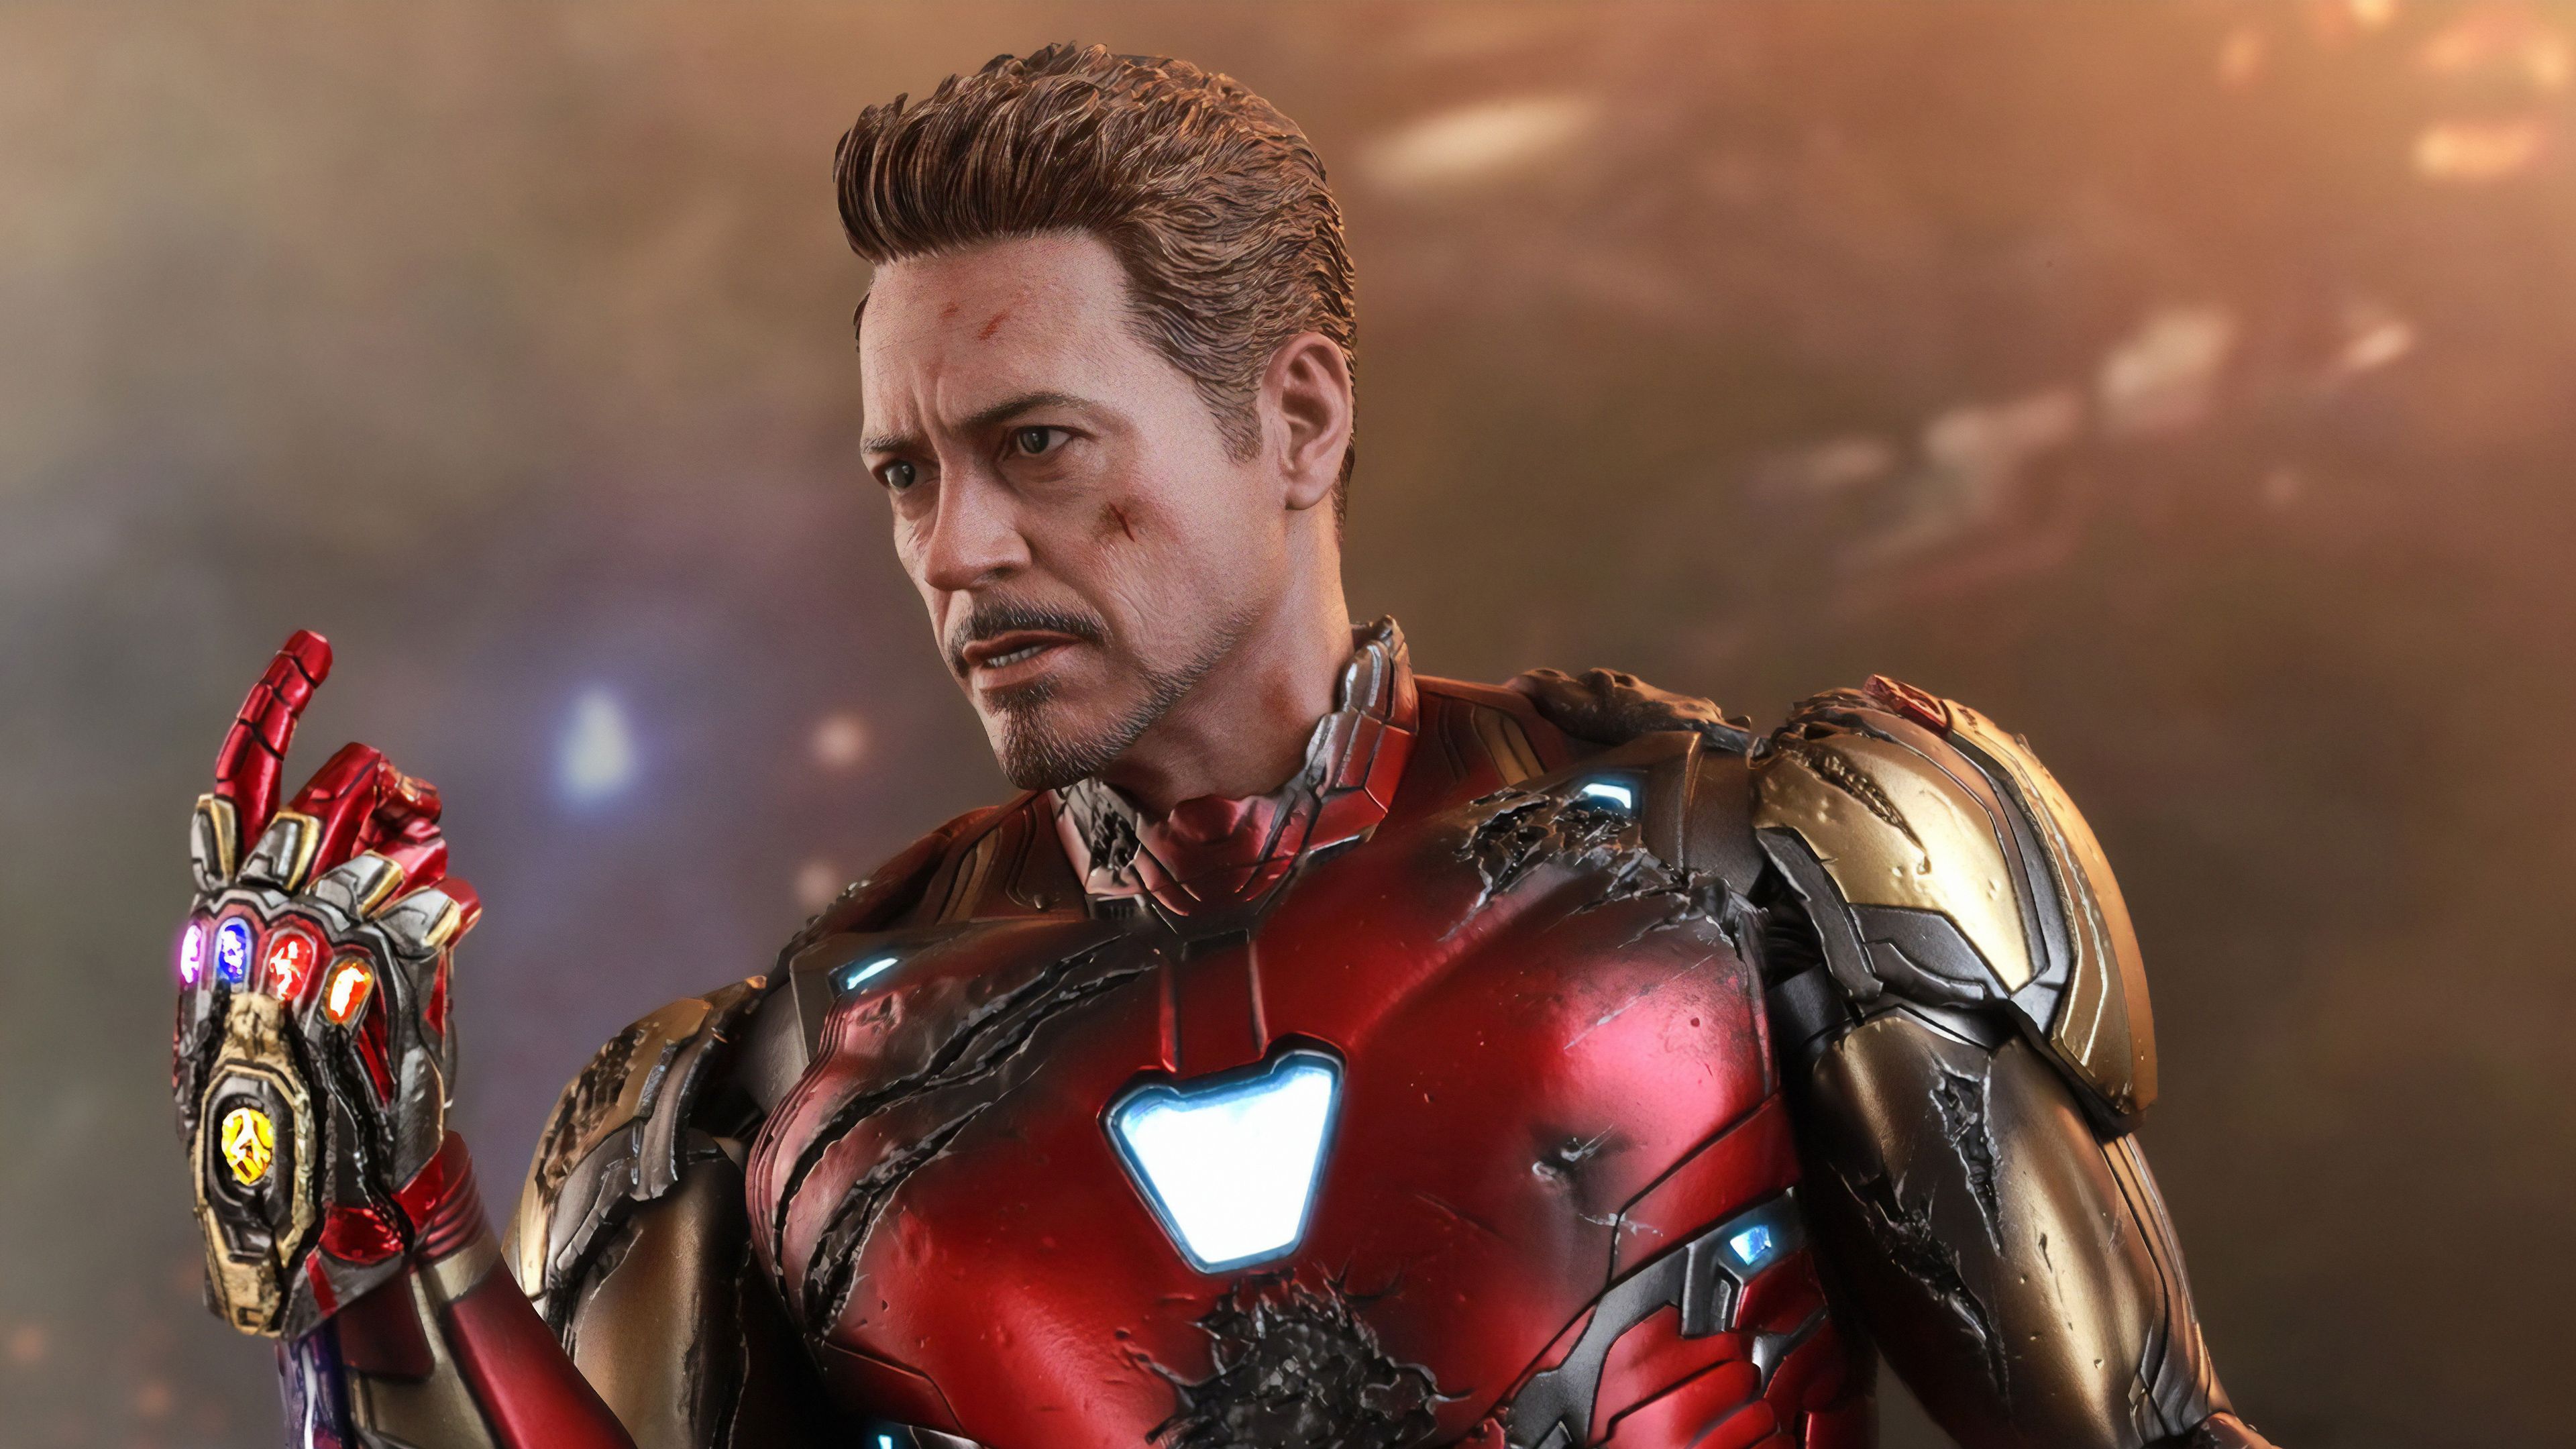 Iron Man Infinity Gauntlet 4k 2019, HD Superheroes, 4k Wallpapers, Image, B...